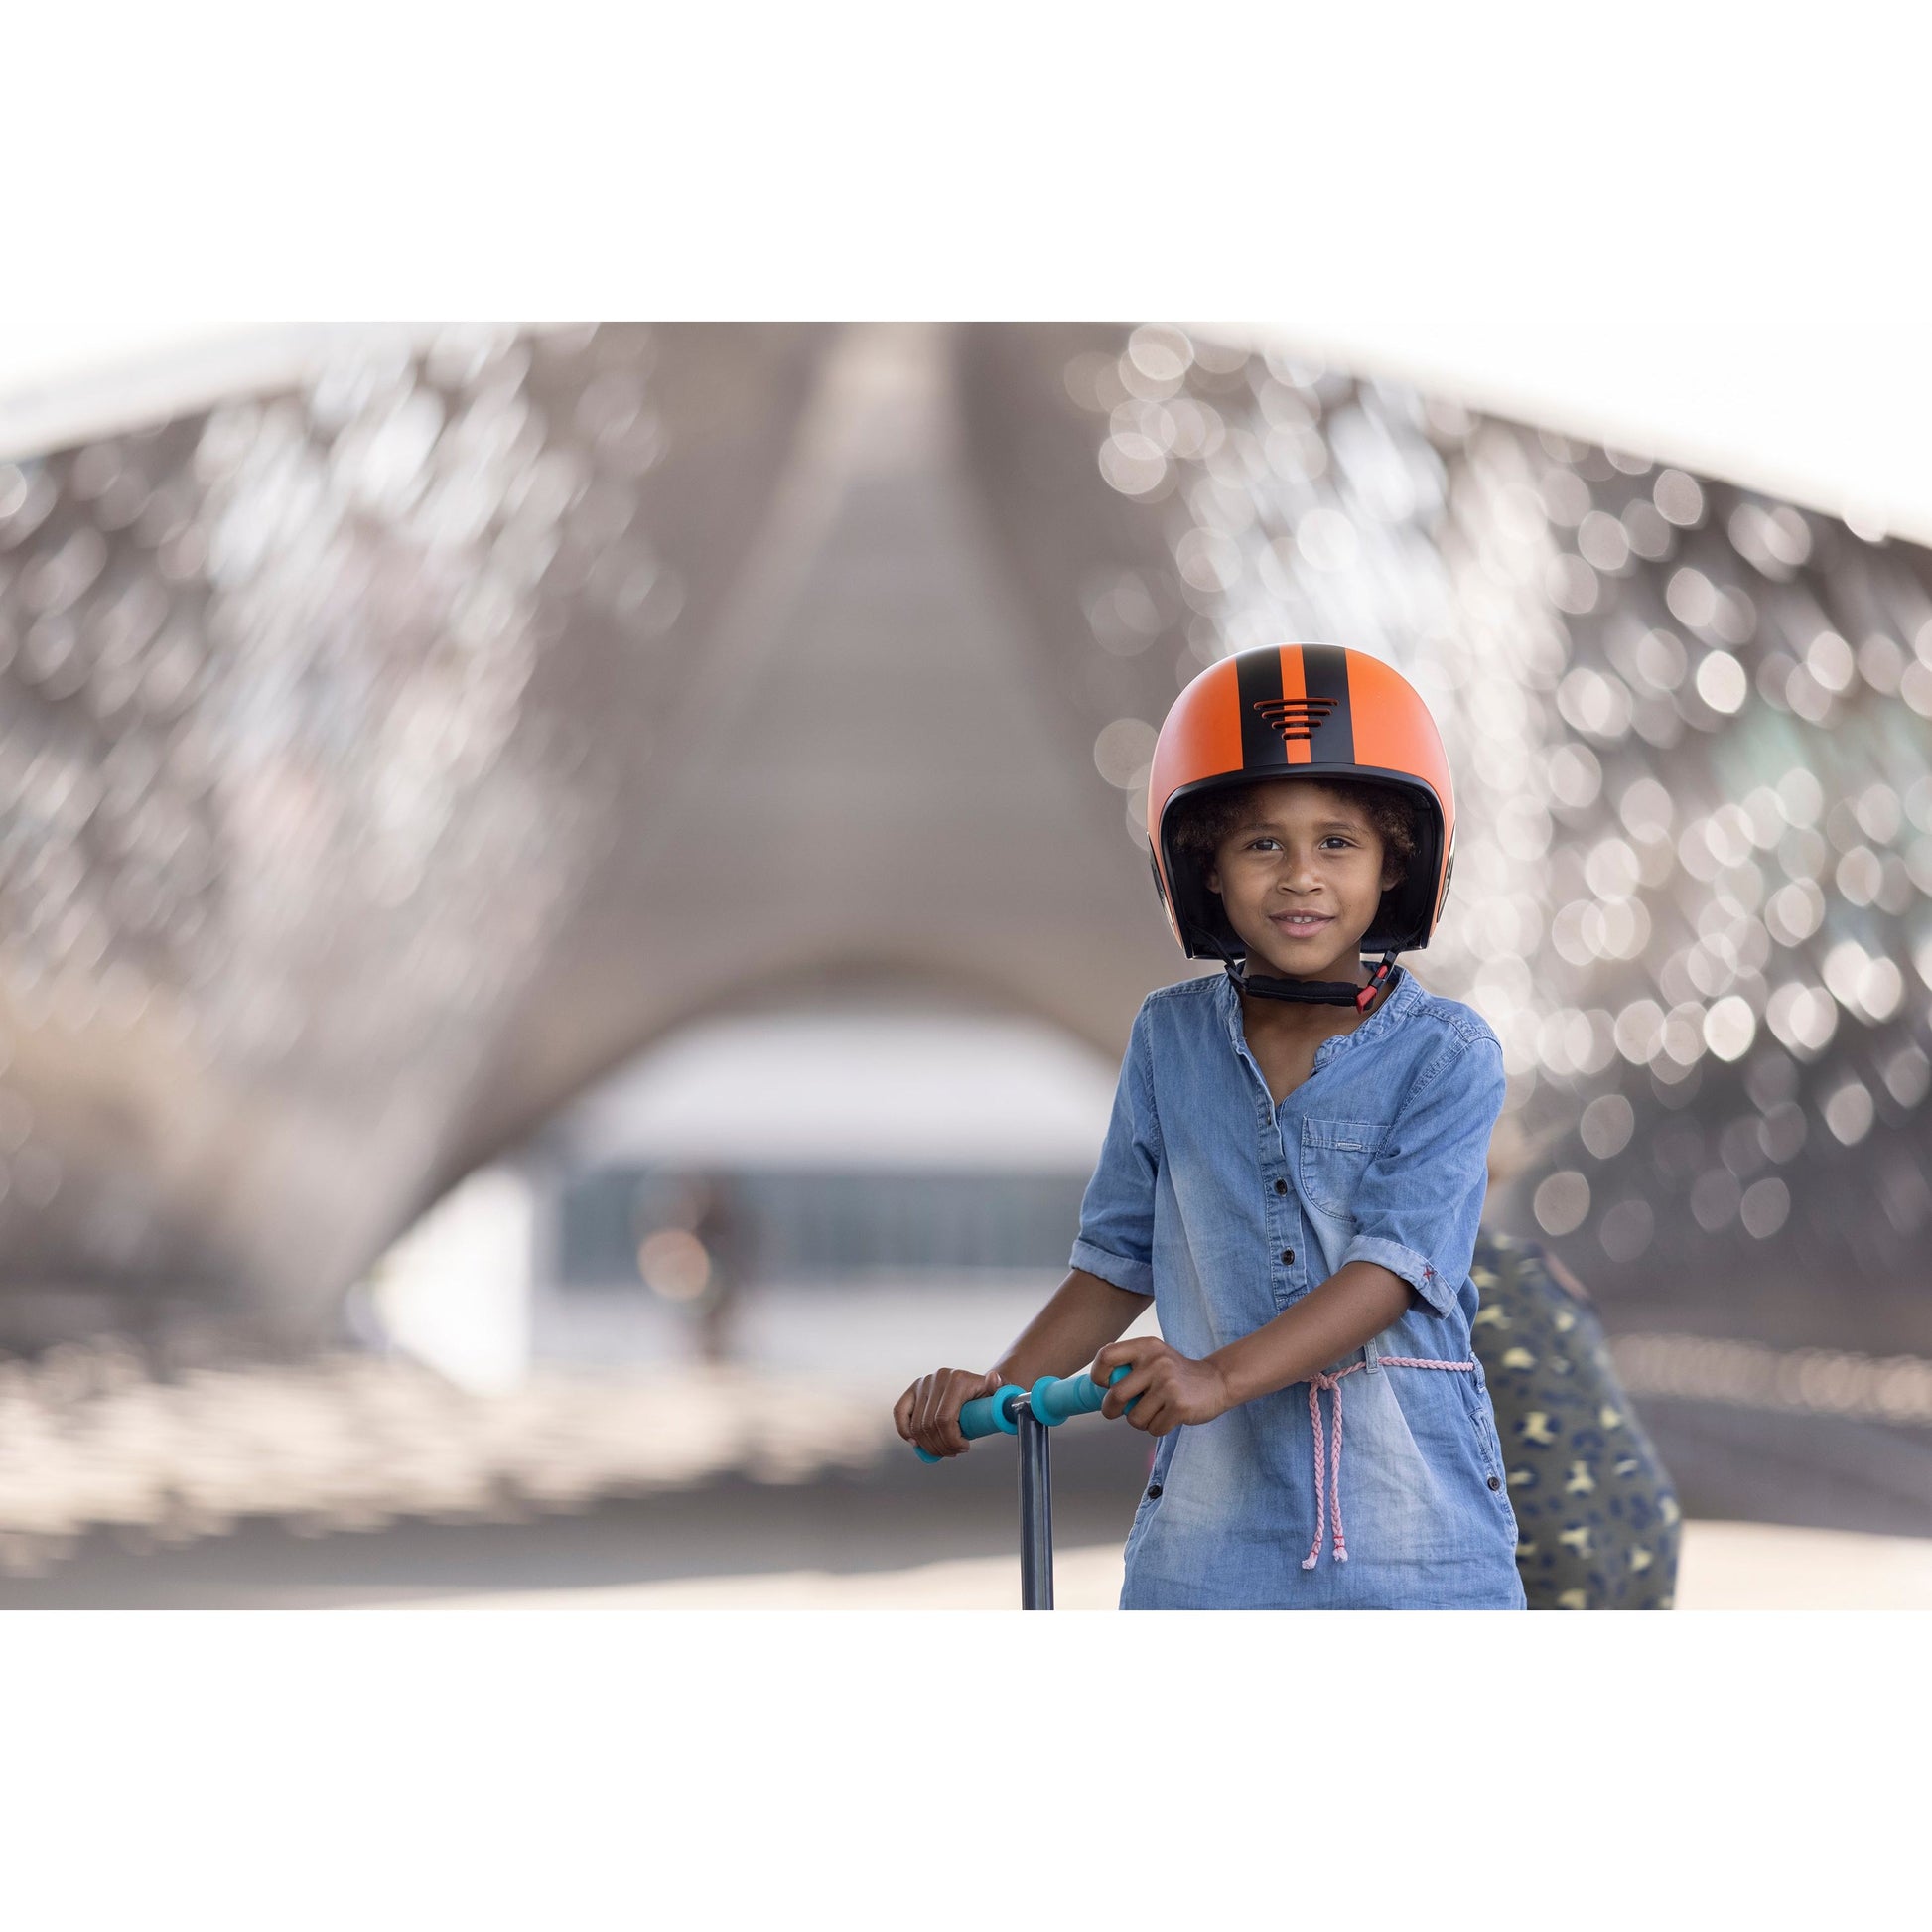 child wearing Chillafish Helmet Bobbi Small Orange standing with scooter